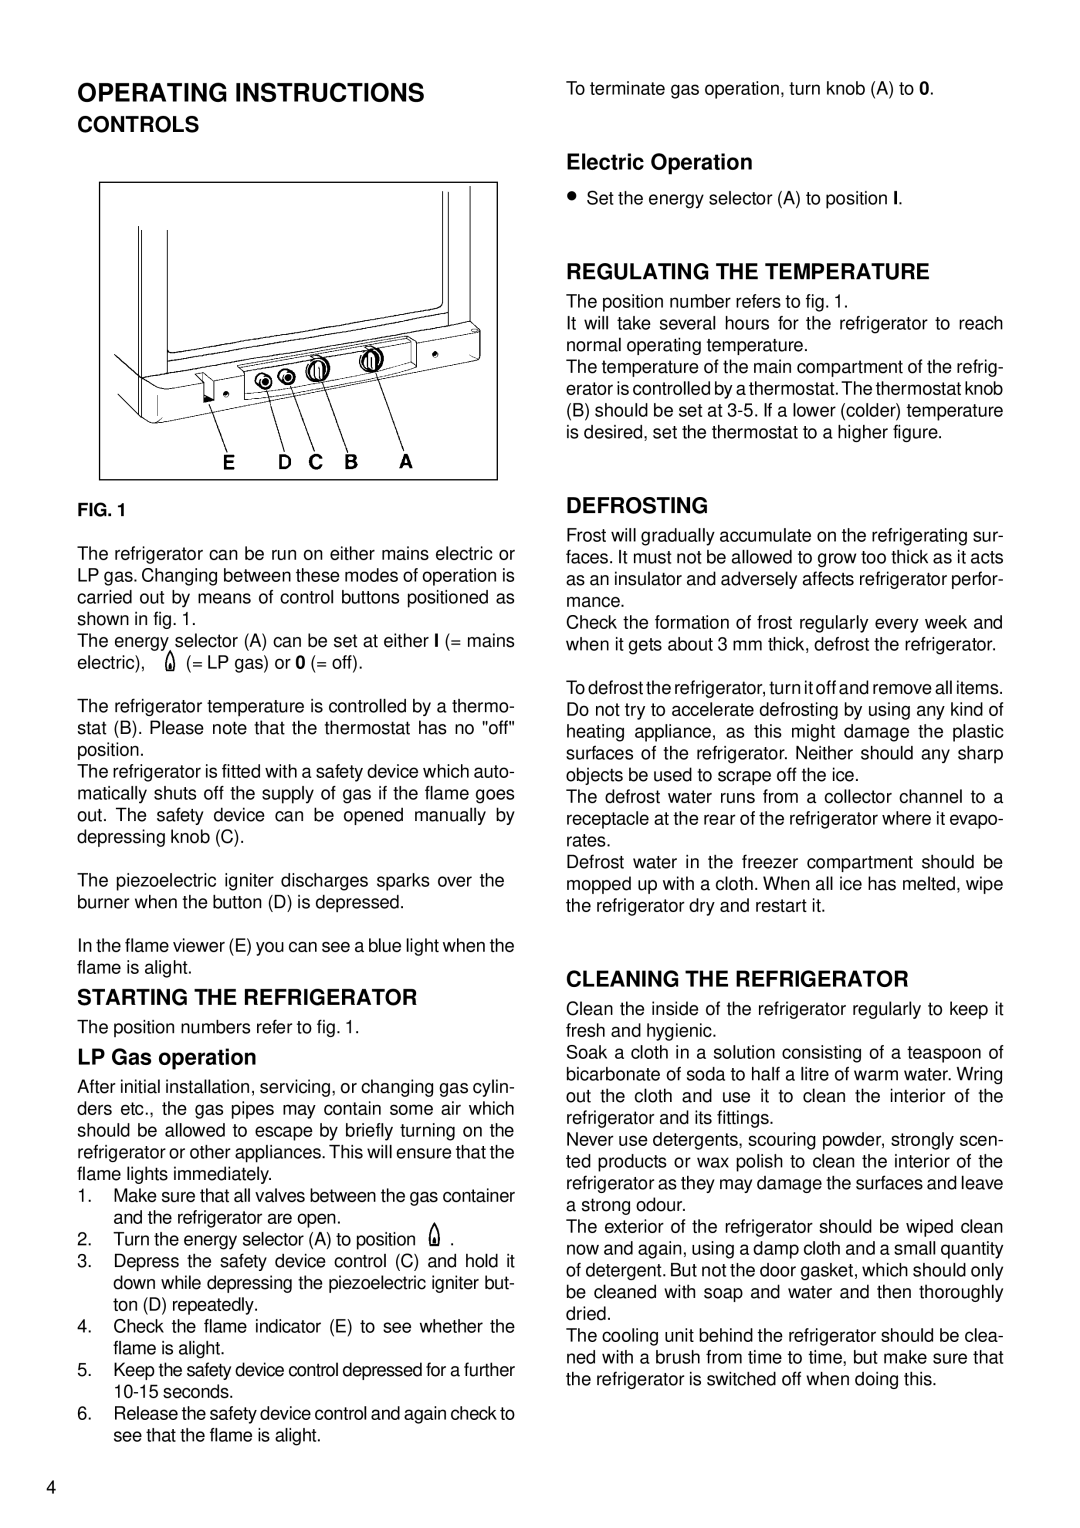 Sibir Optics RM 1-D Operating Instructions, Controls, Starting The Refrigerator, LP Gas operation, Electric Operation 